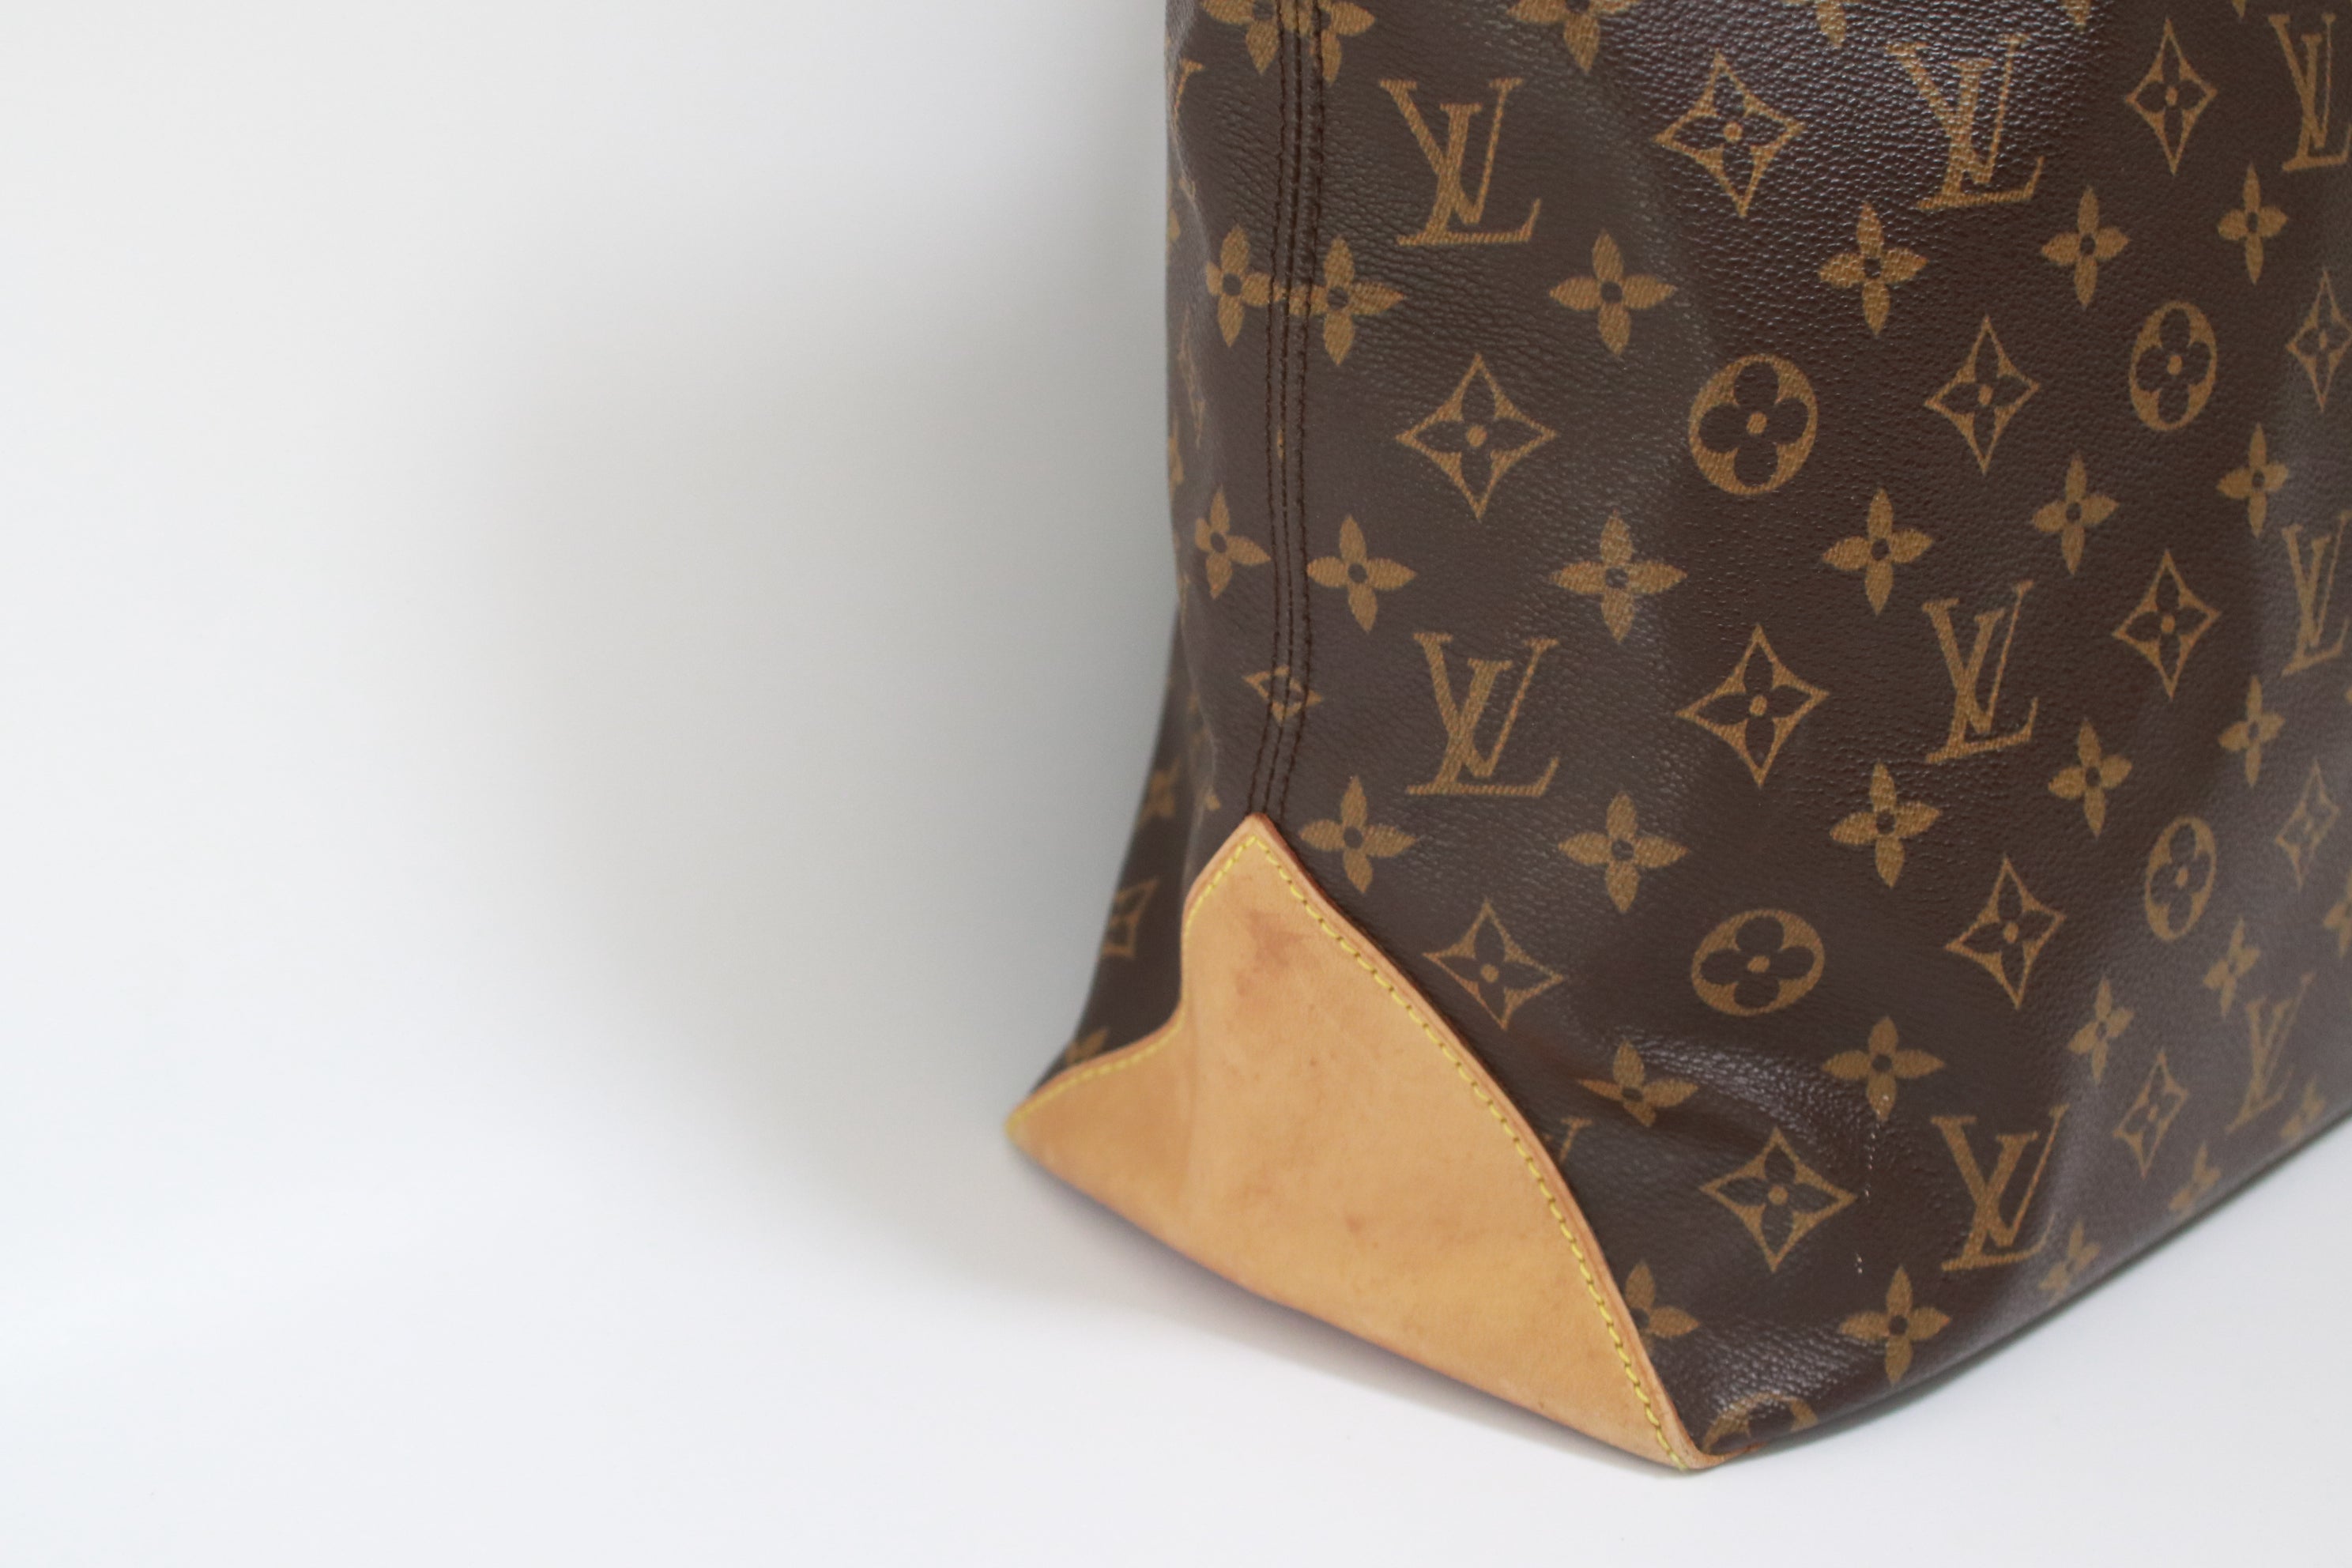 Cabas Mezzo, Used & Preloved Louis Vuitton Tote Bag